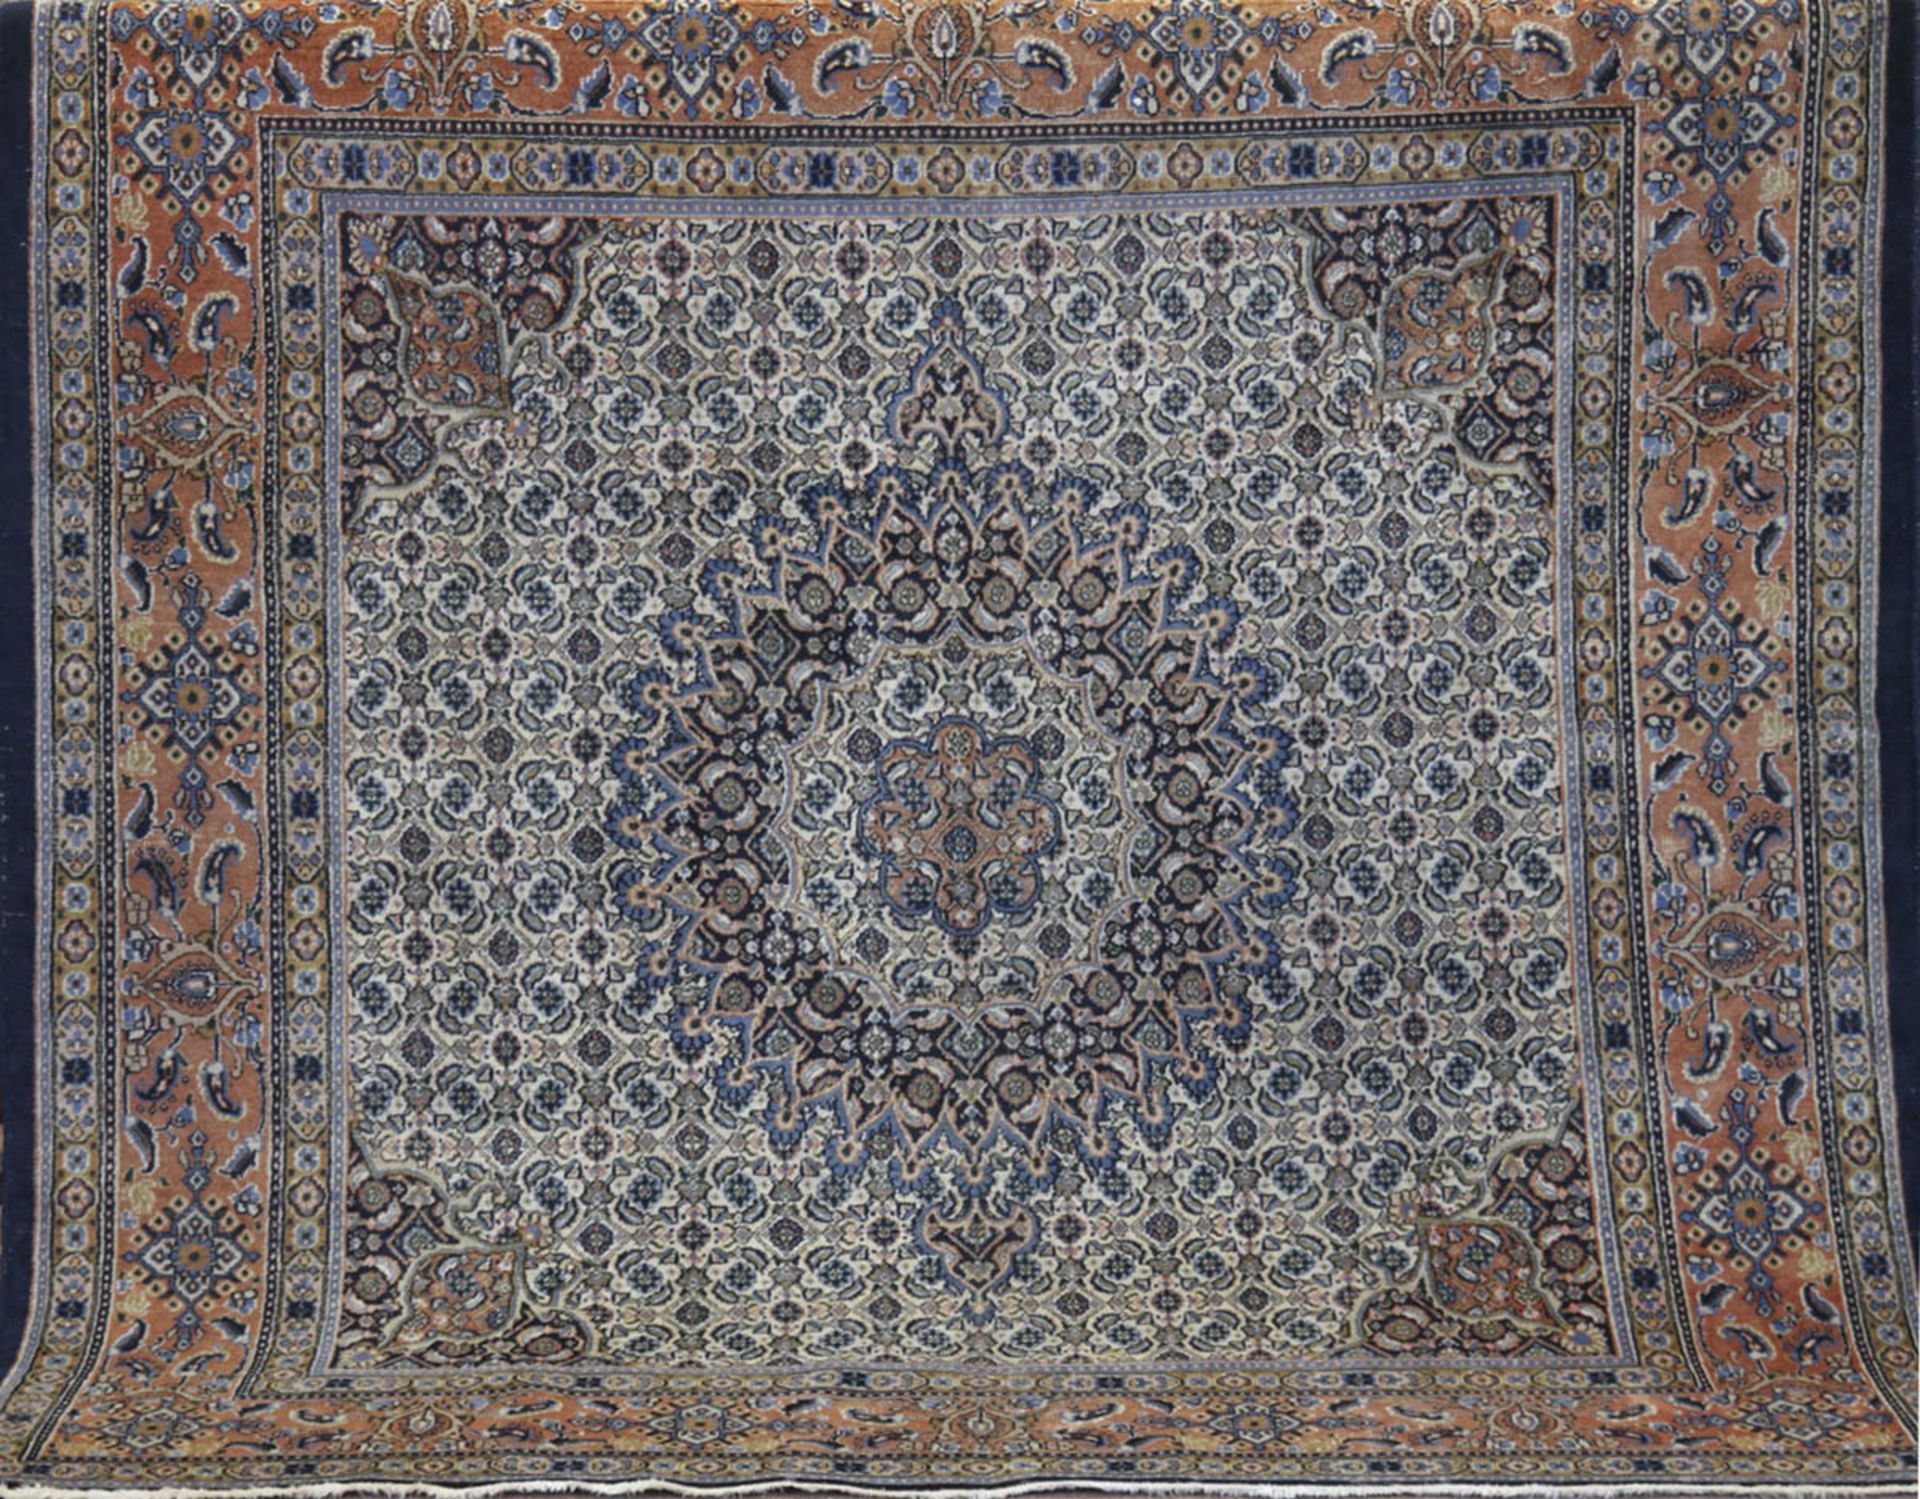 Orient-Teppich, Moud, Persien, dunkelgrundig, mit zentralem Medaillon, Floralmotiven, Kanten sowie 